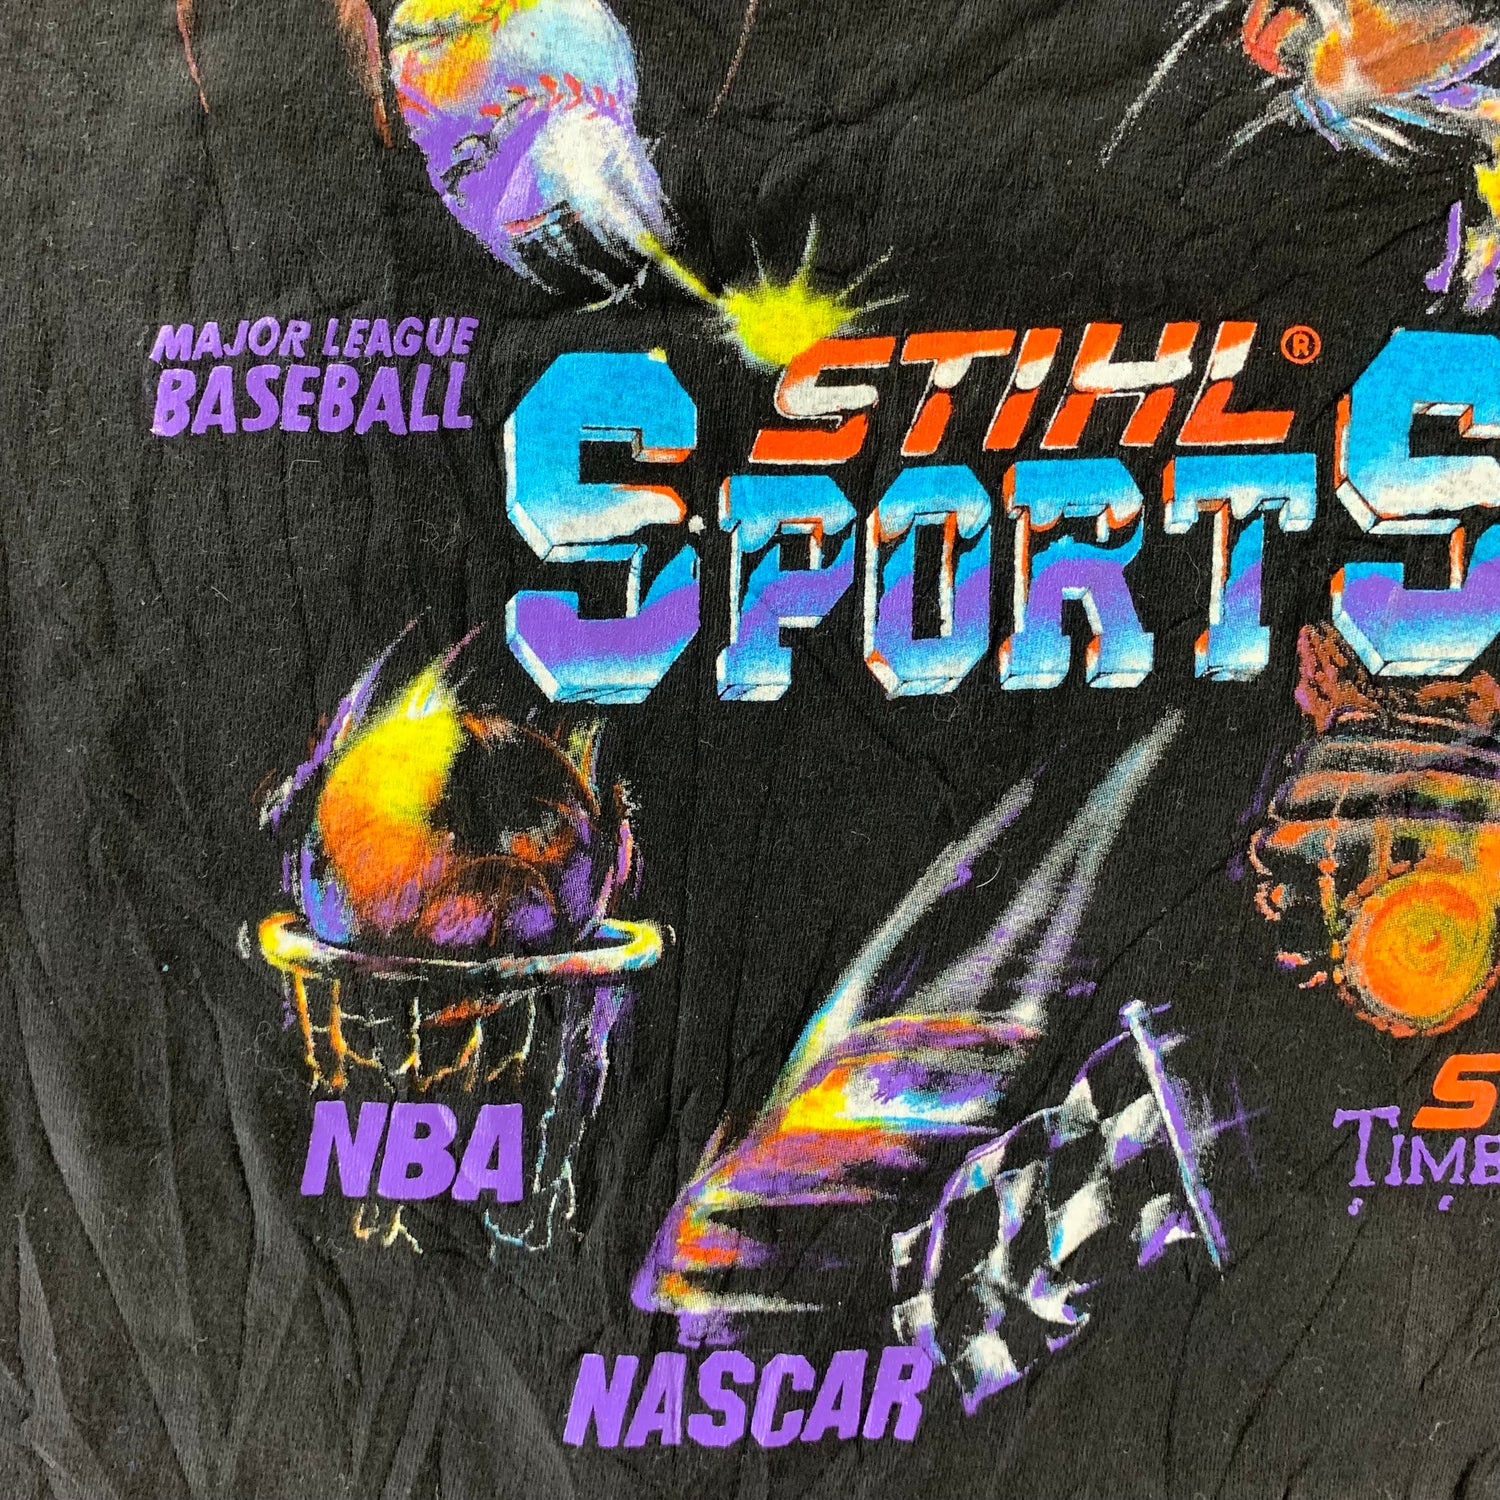 Vintage 1990s Stihl Sports T-shirt size XL